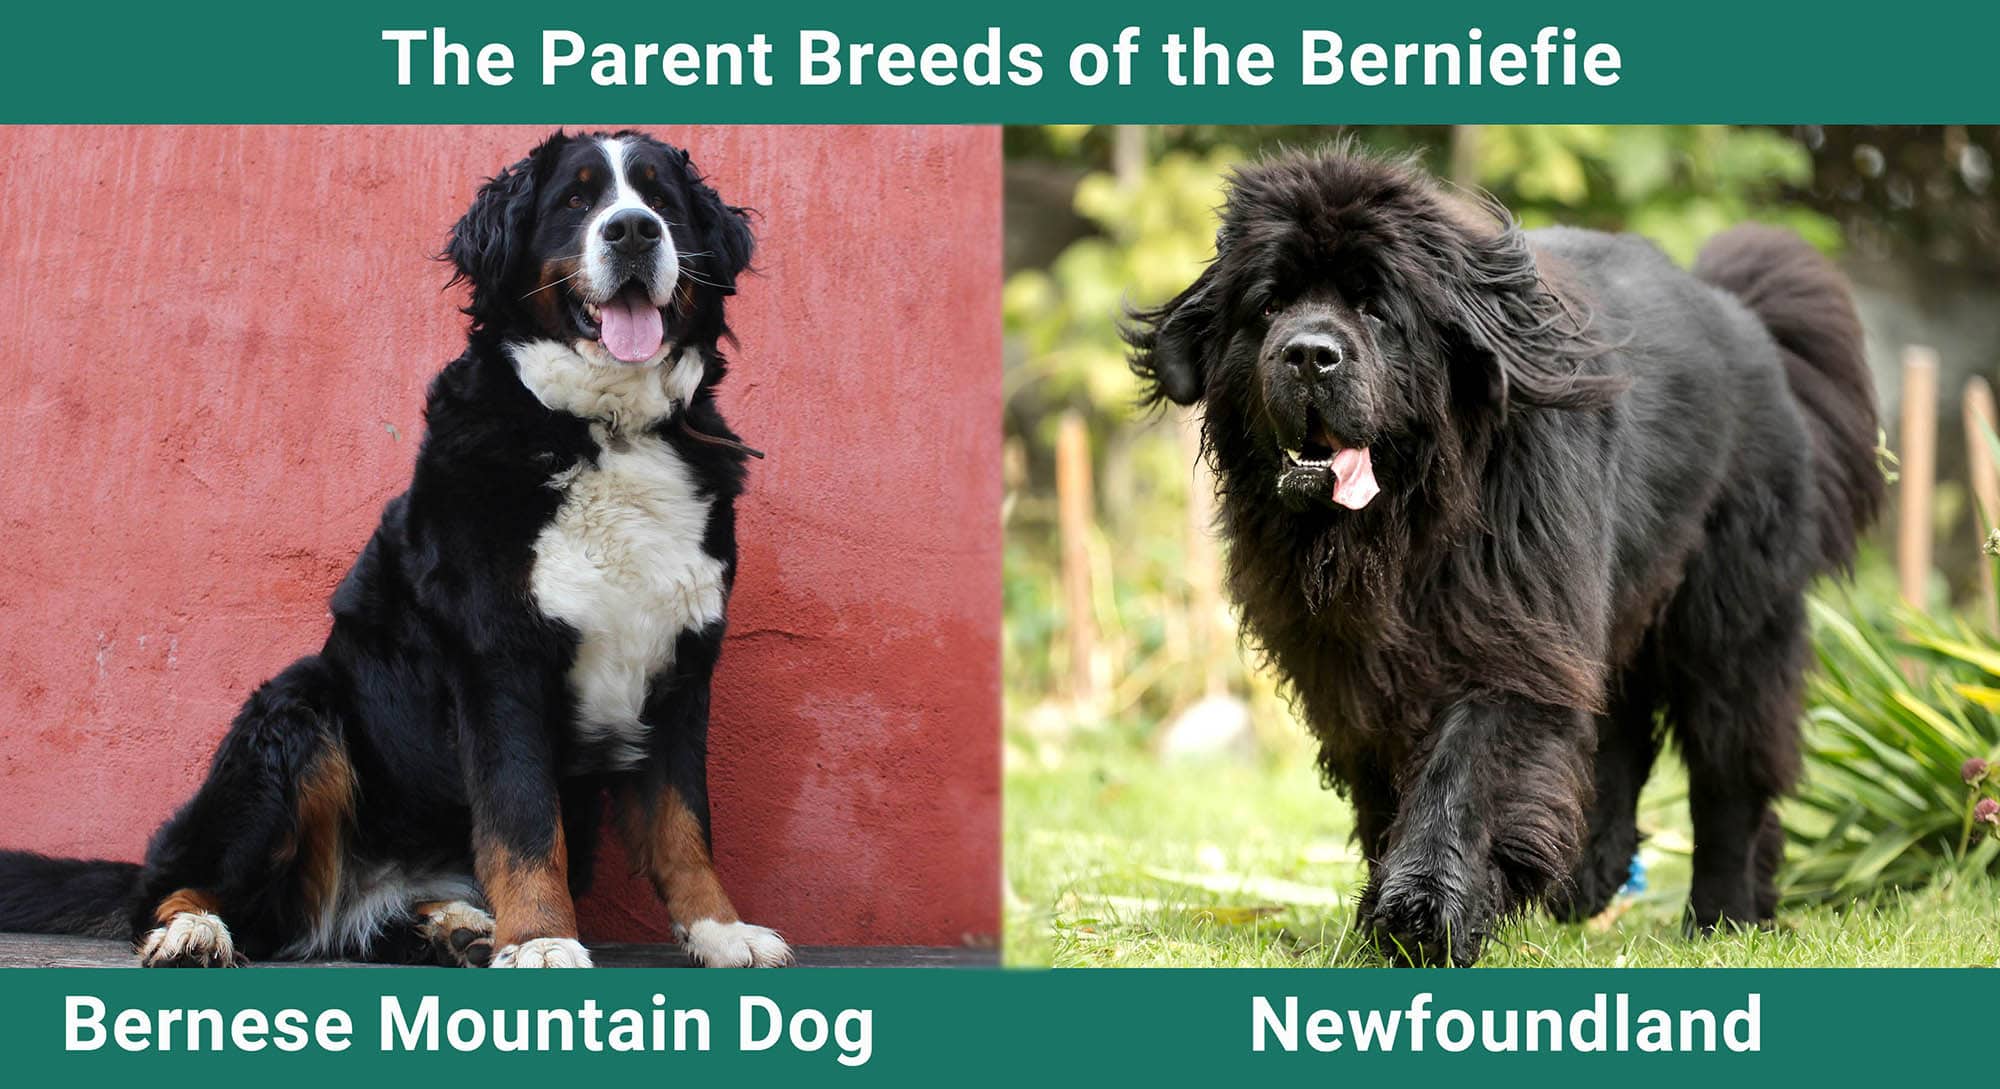 The Parent Breeds of the Berniefie